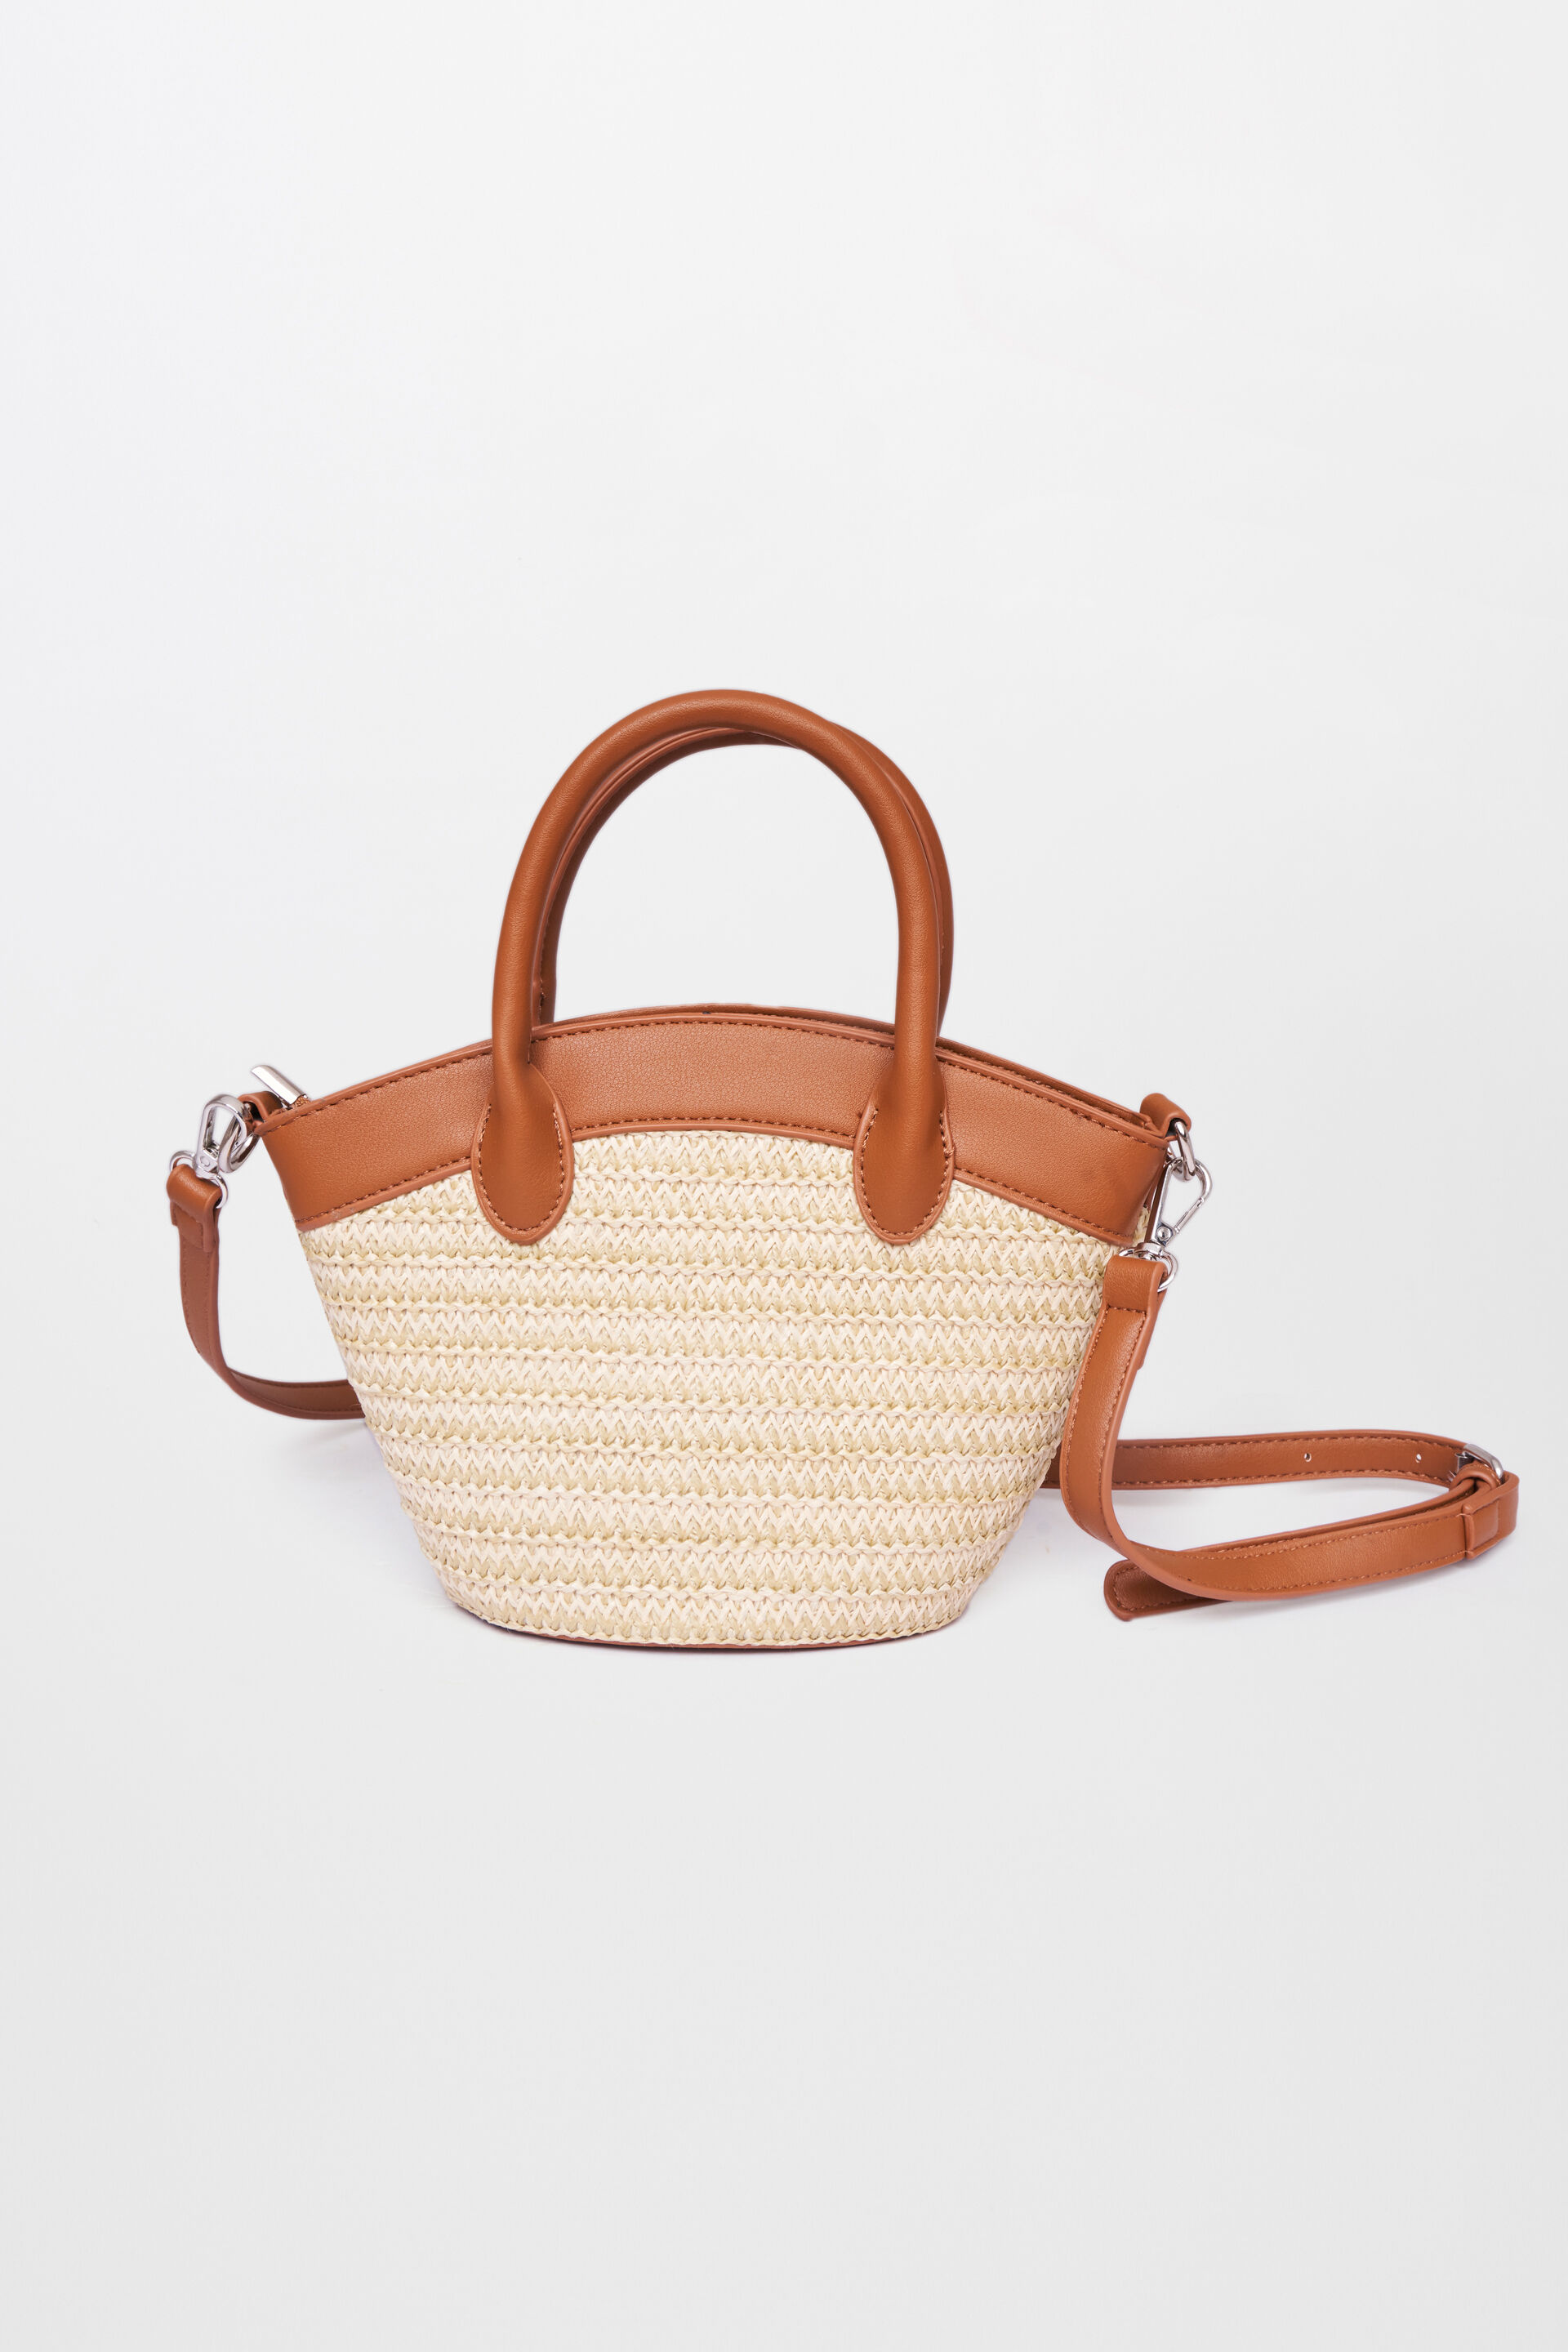 Women's Handbags | Timeless Elegance and Functionality – The Sak